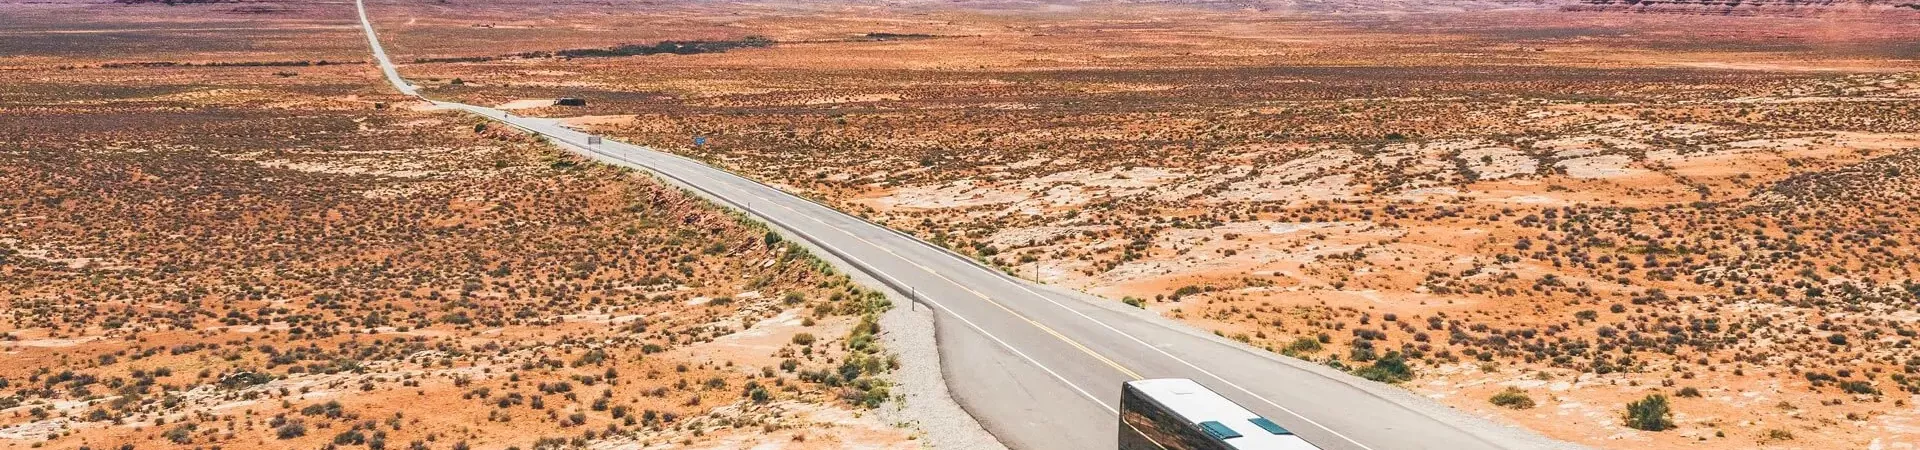 A bus travelling through the desert